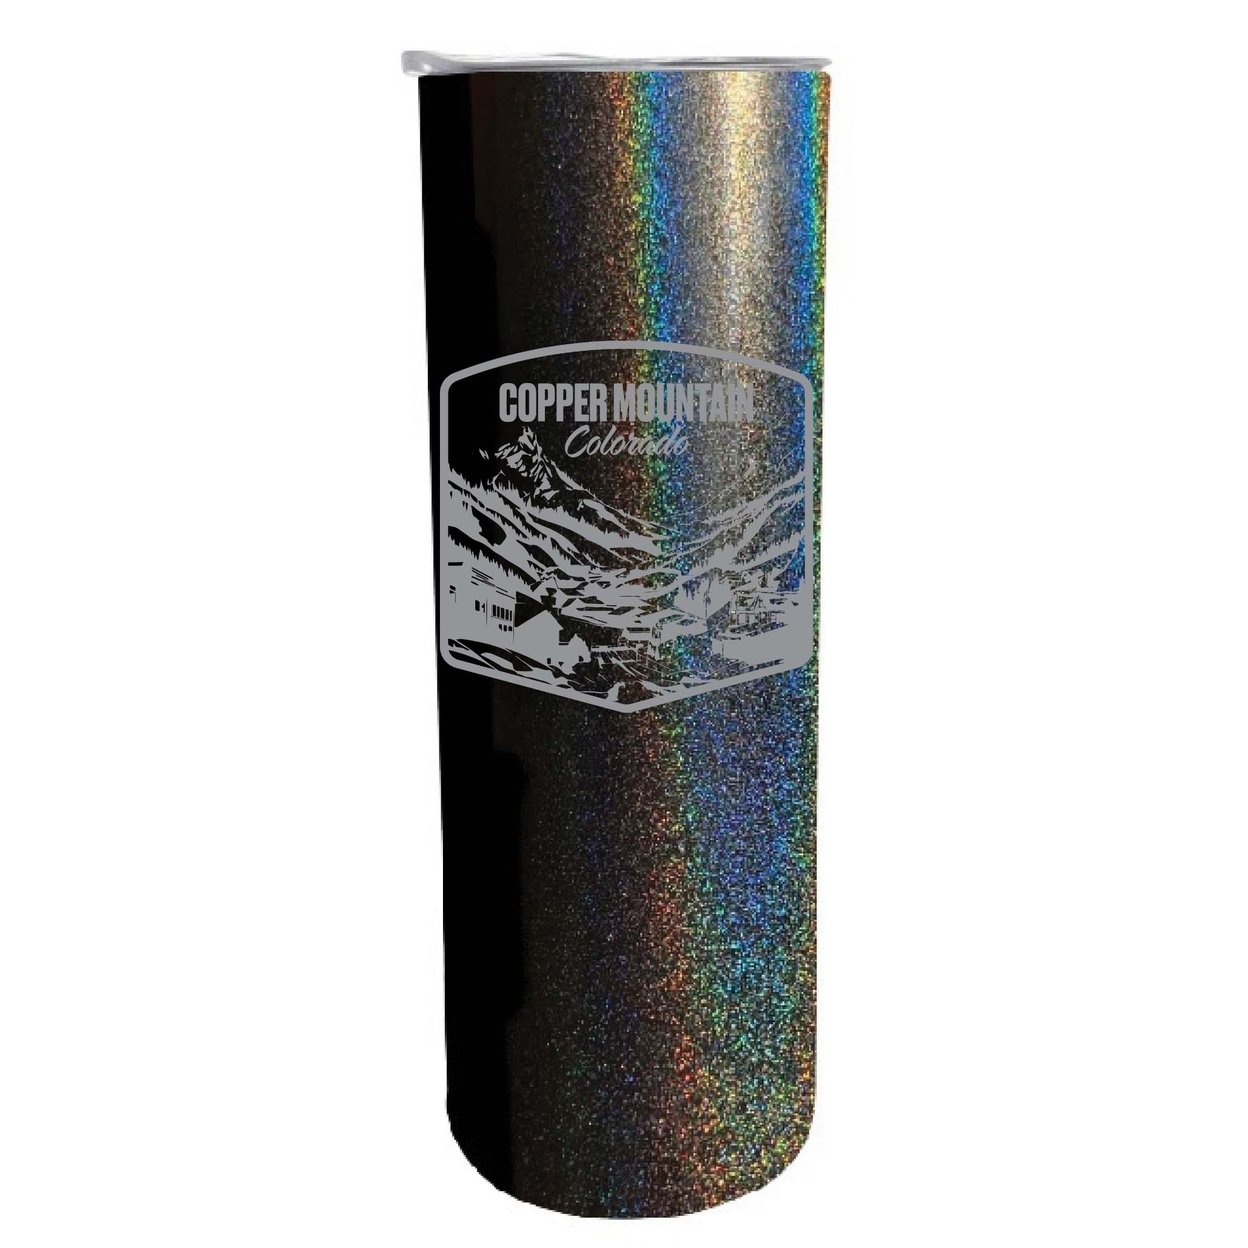 Copper Mountain Souvenir 20 Oz Engraved Insulated Skinny Tumbler - Black Glitter,,Single Unit